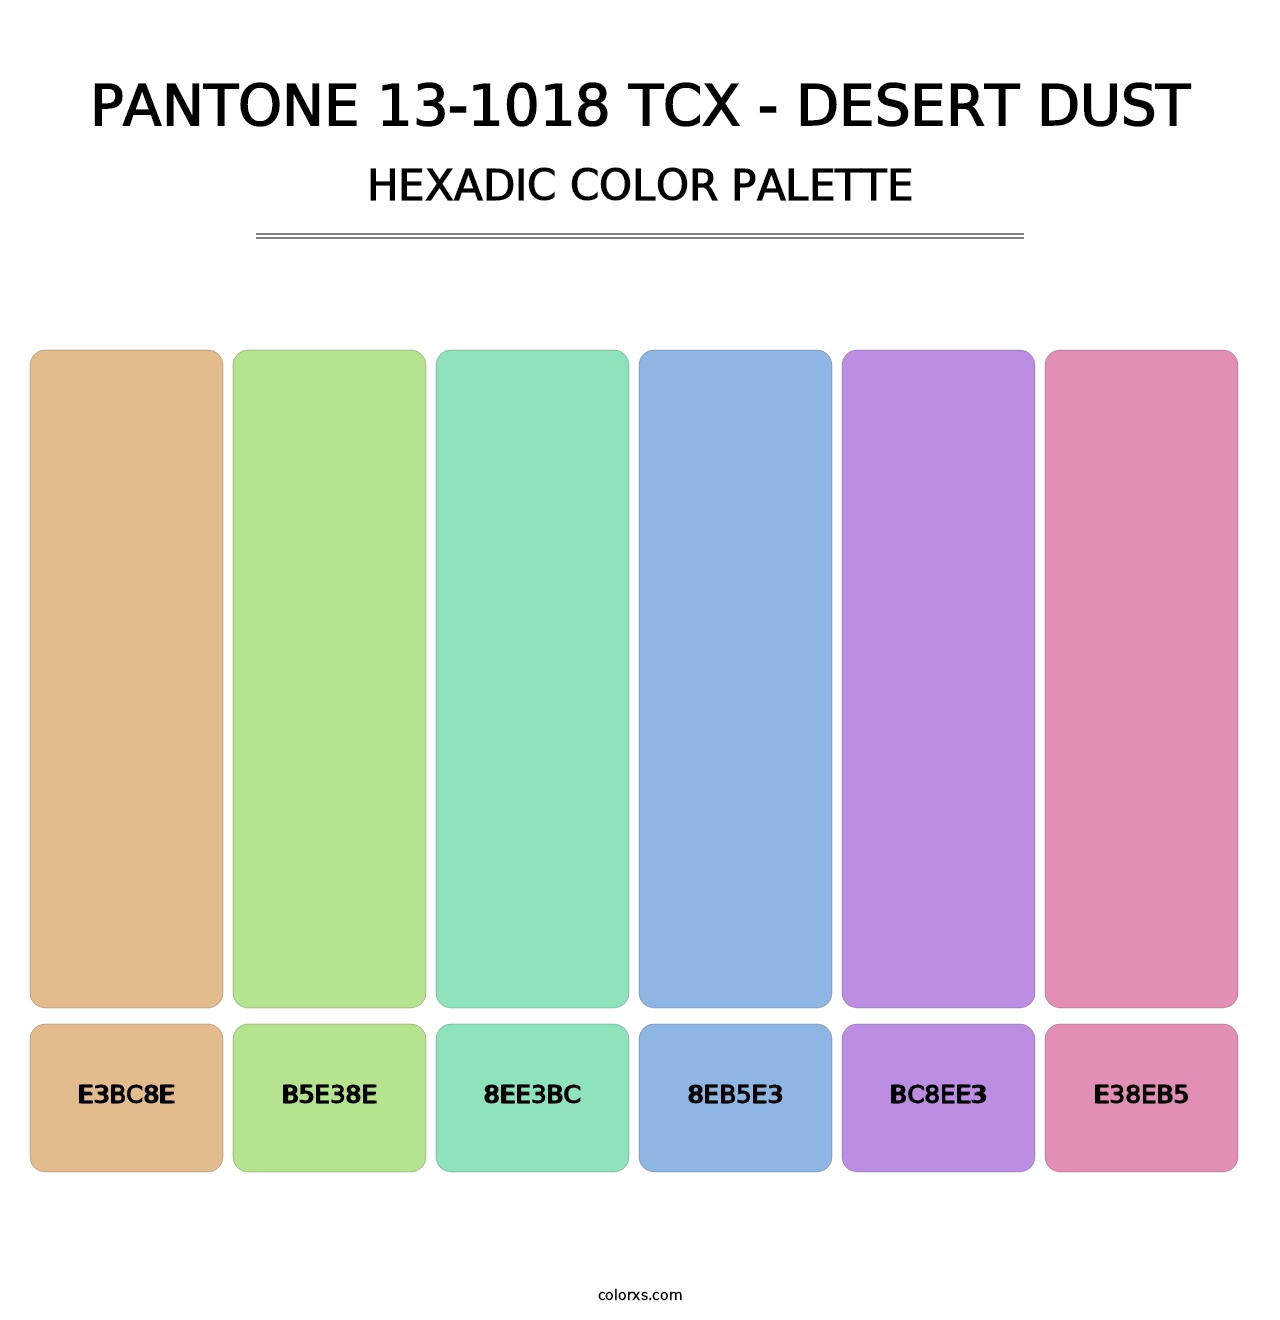 PANTONE 13-1018 TCX - Desert Dust - Hexadic Color Palette